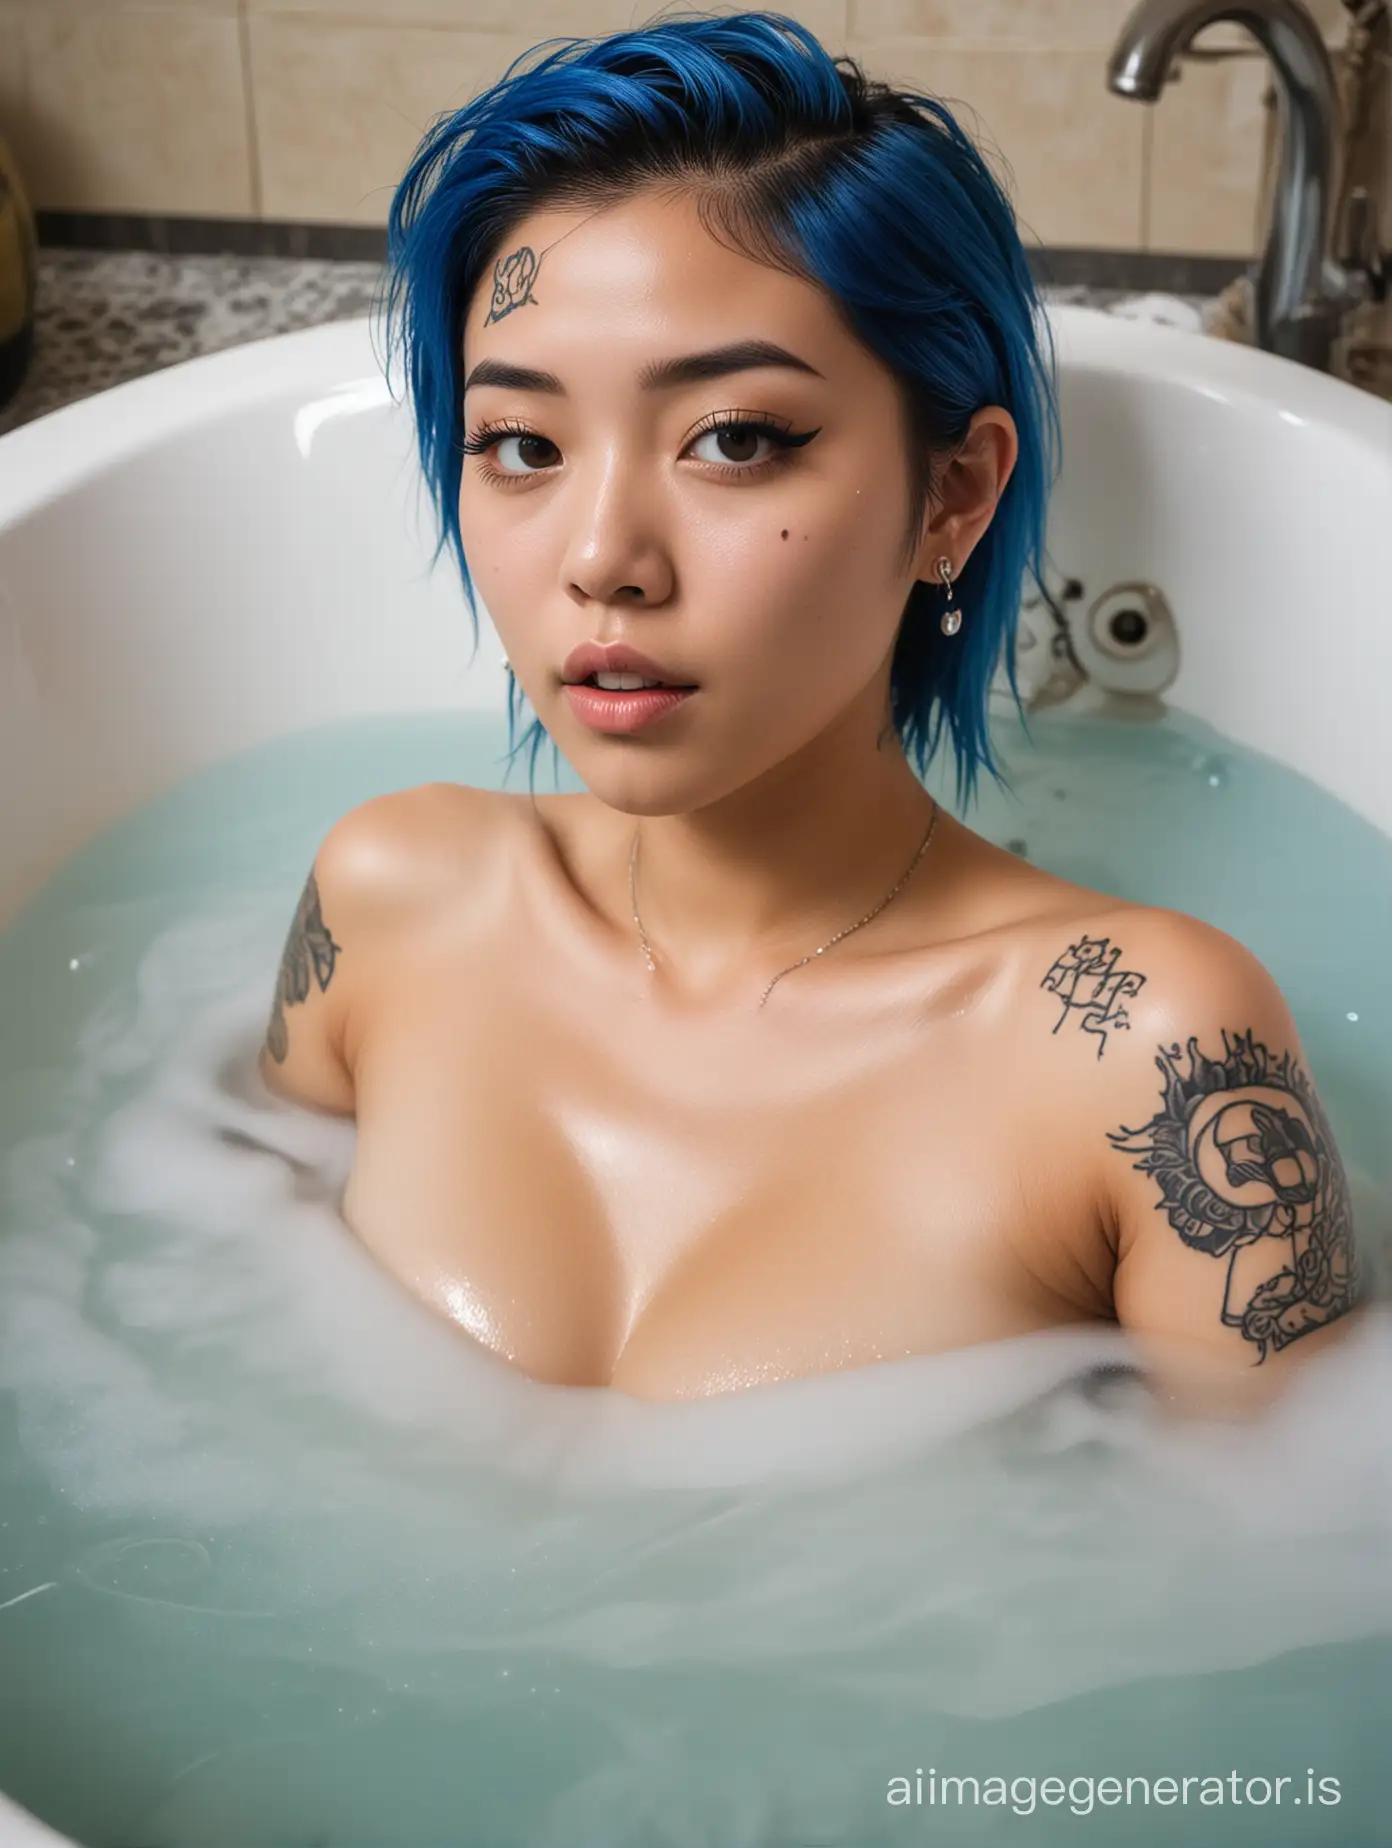 Edgy-Petite-Asian-Girl-Enjoying-Bubble-Bath-in-Vintage-Tub